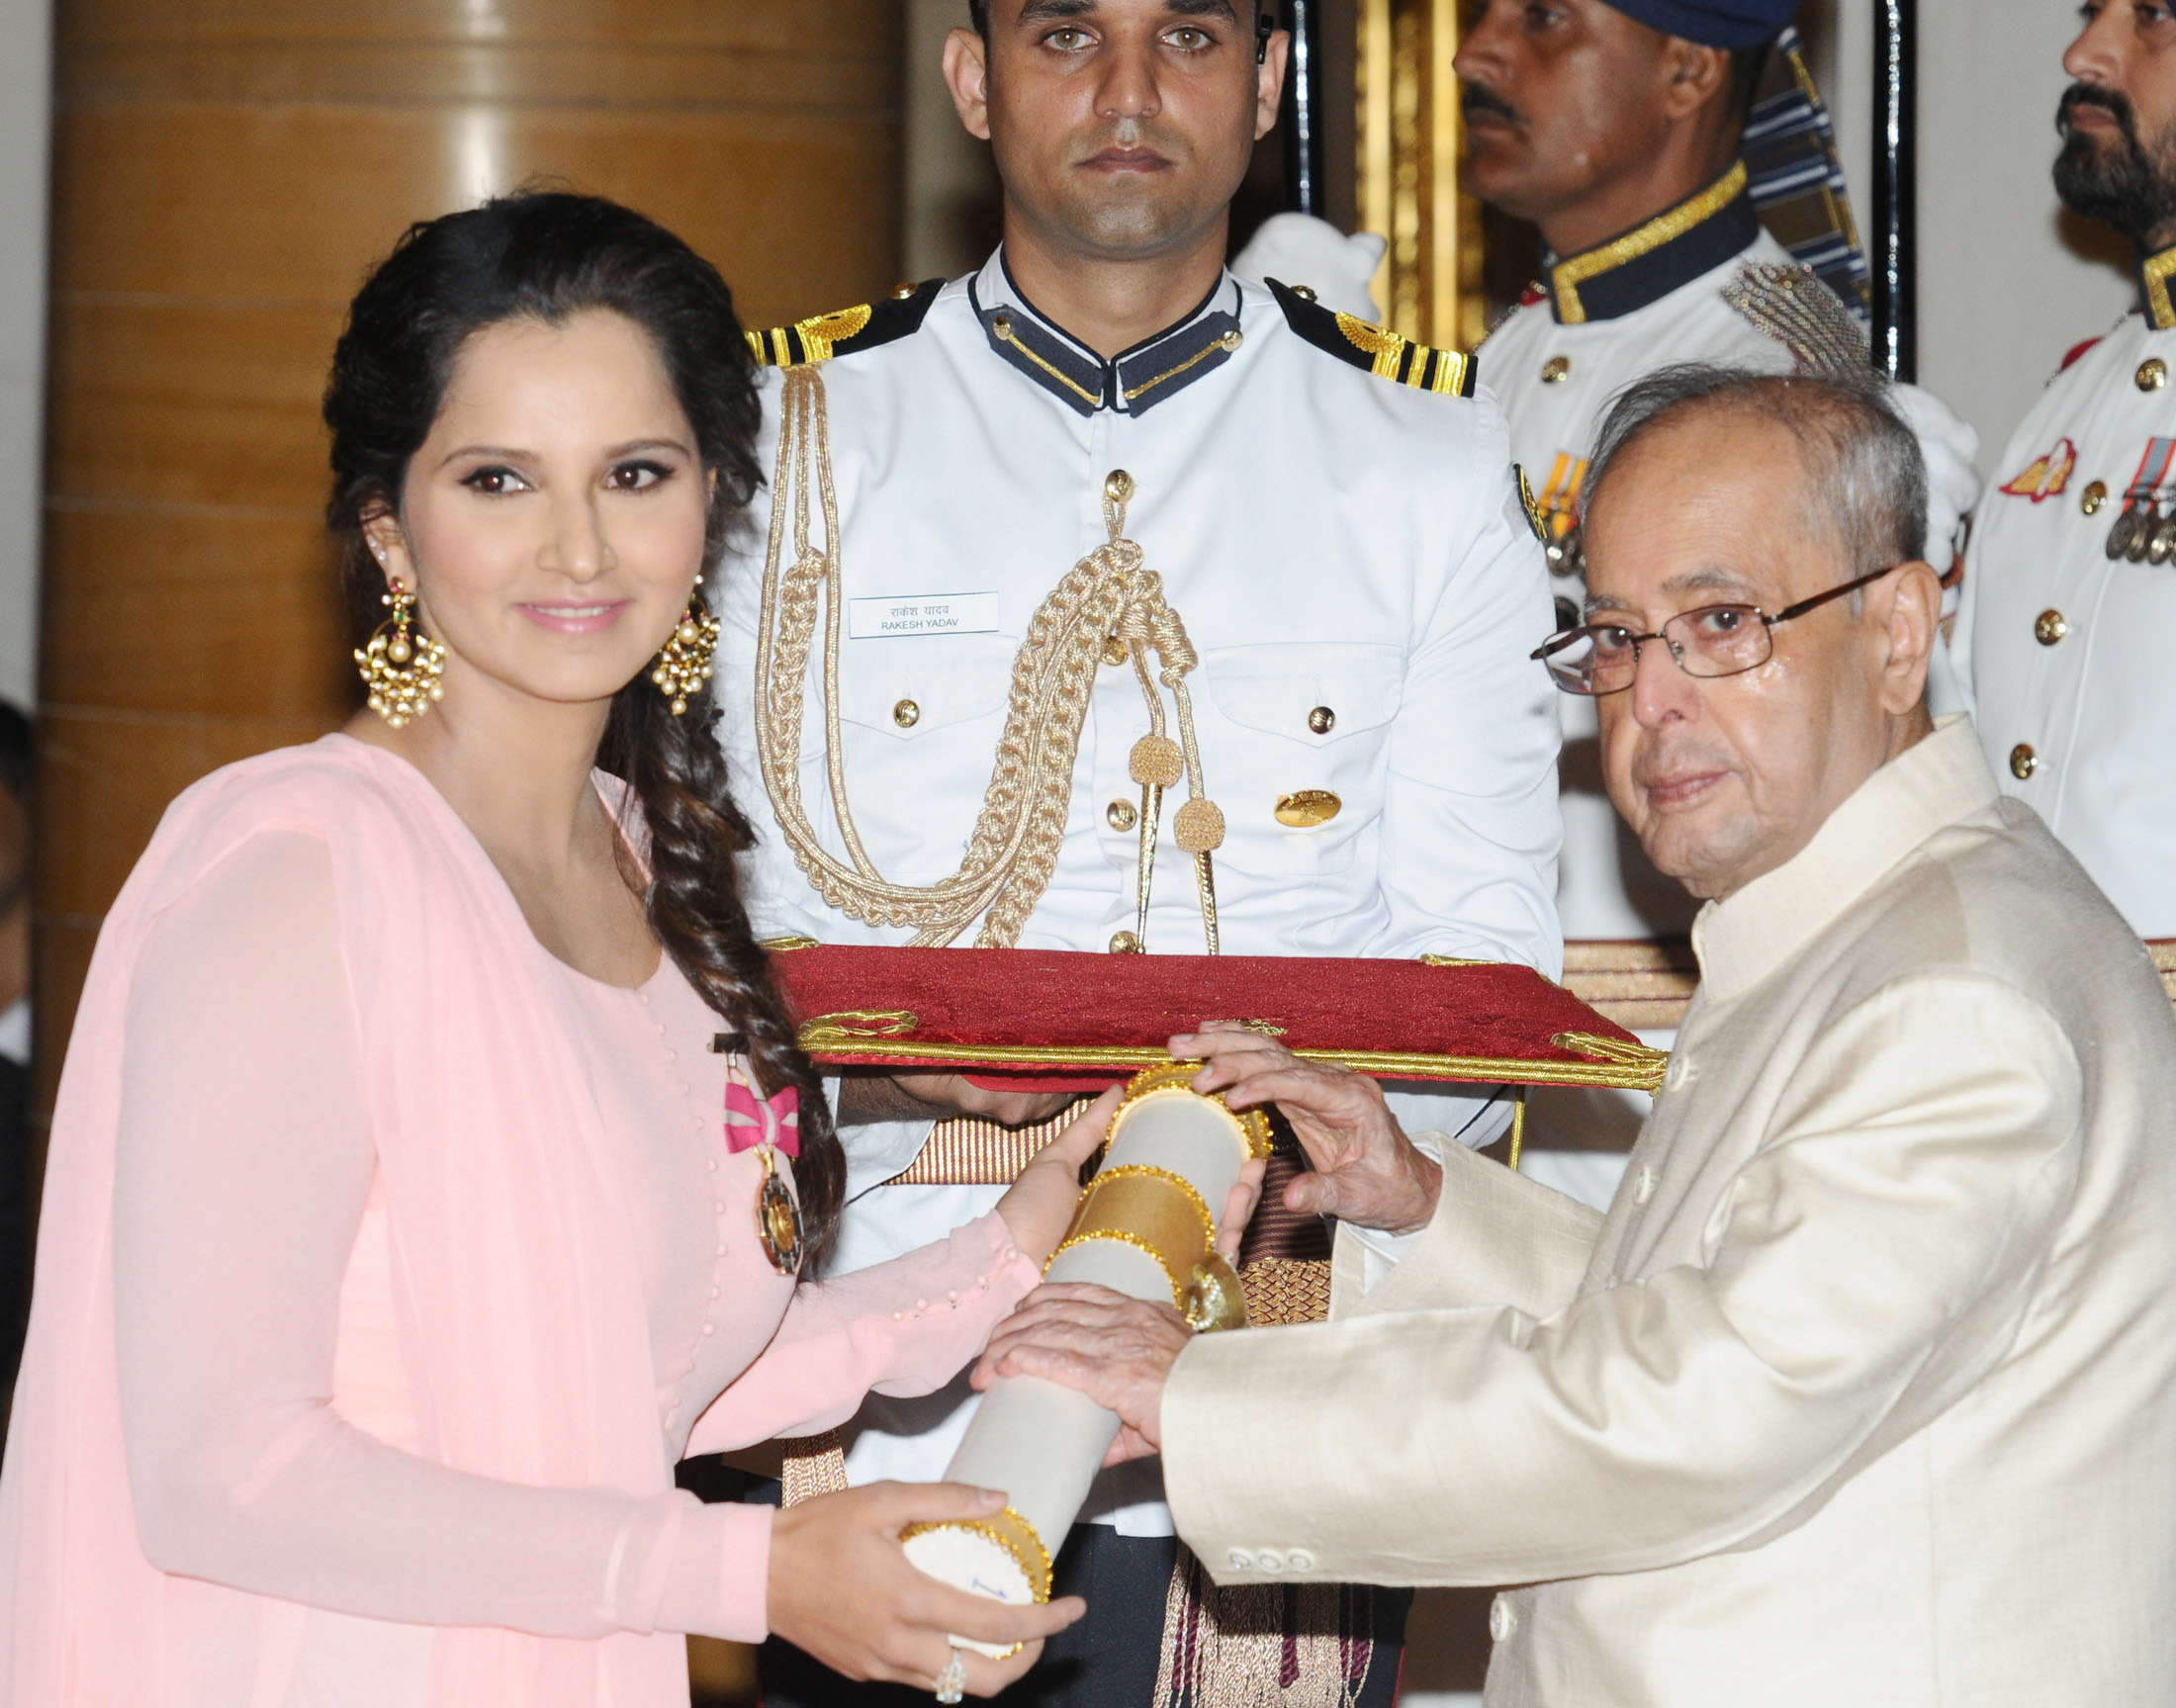 The President, Shri Pranab Mukherjee presenting the Padma Bhushan Award to Sania Mirza, at a Civil Investiture Ceremony, at Rashtrapati Bhavan, in New Delhi on April 12, 2016.